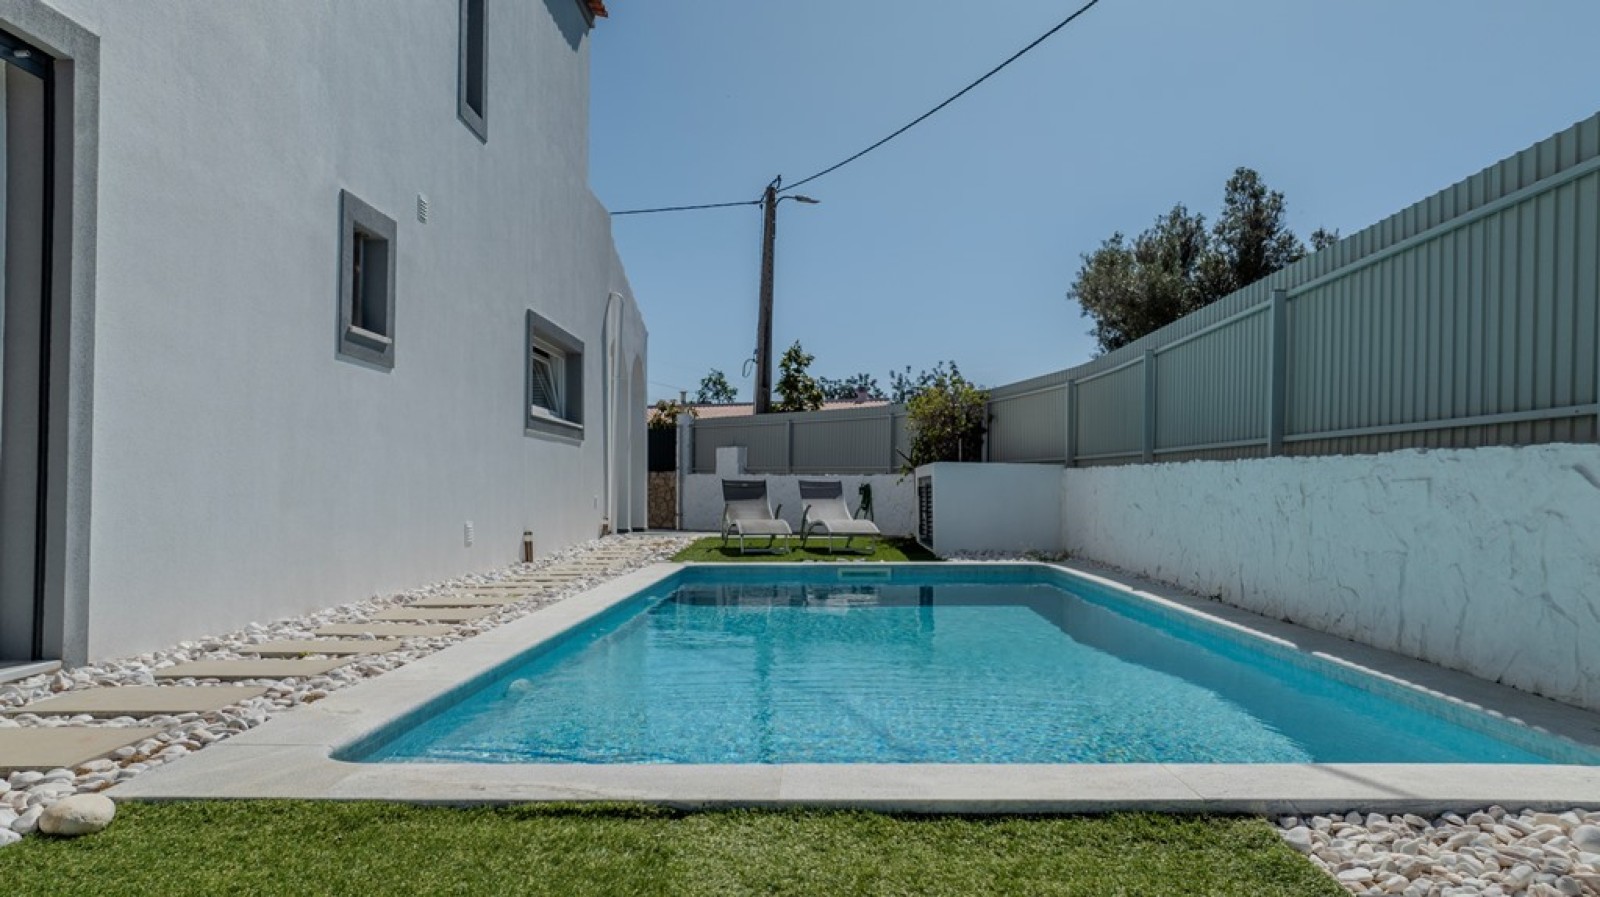 Moradia V4 renovada com piscina, para venda em Vilamoura, Algarve_268747